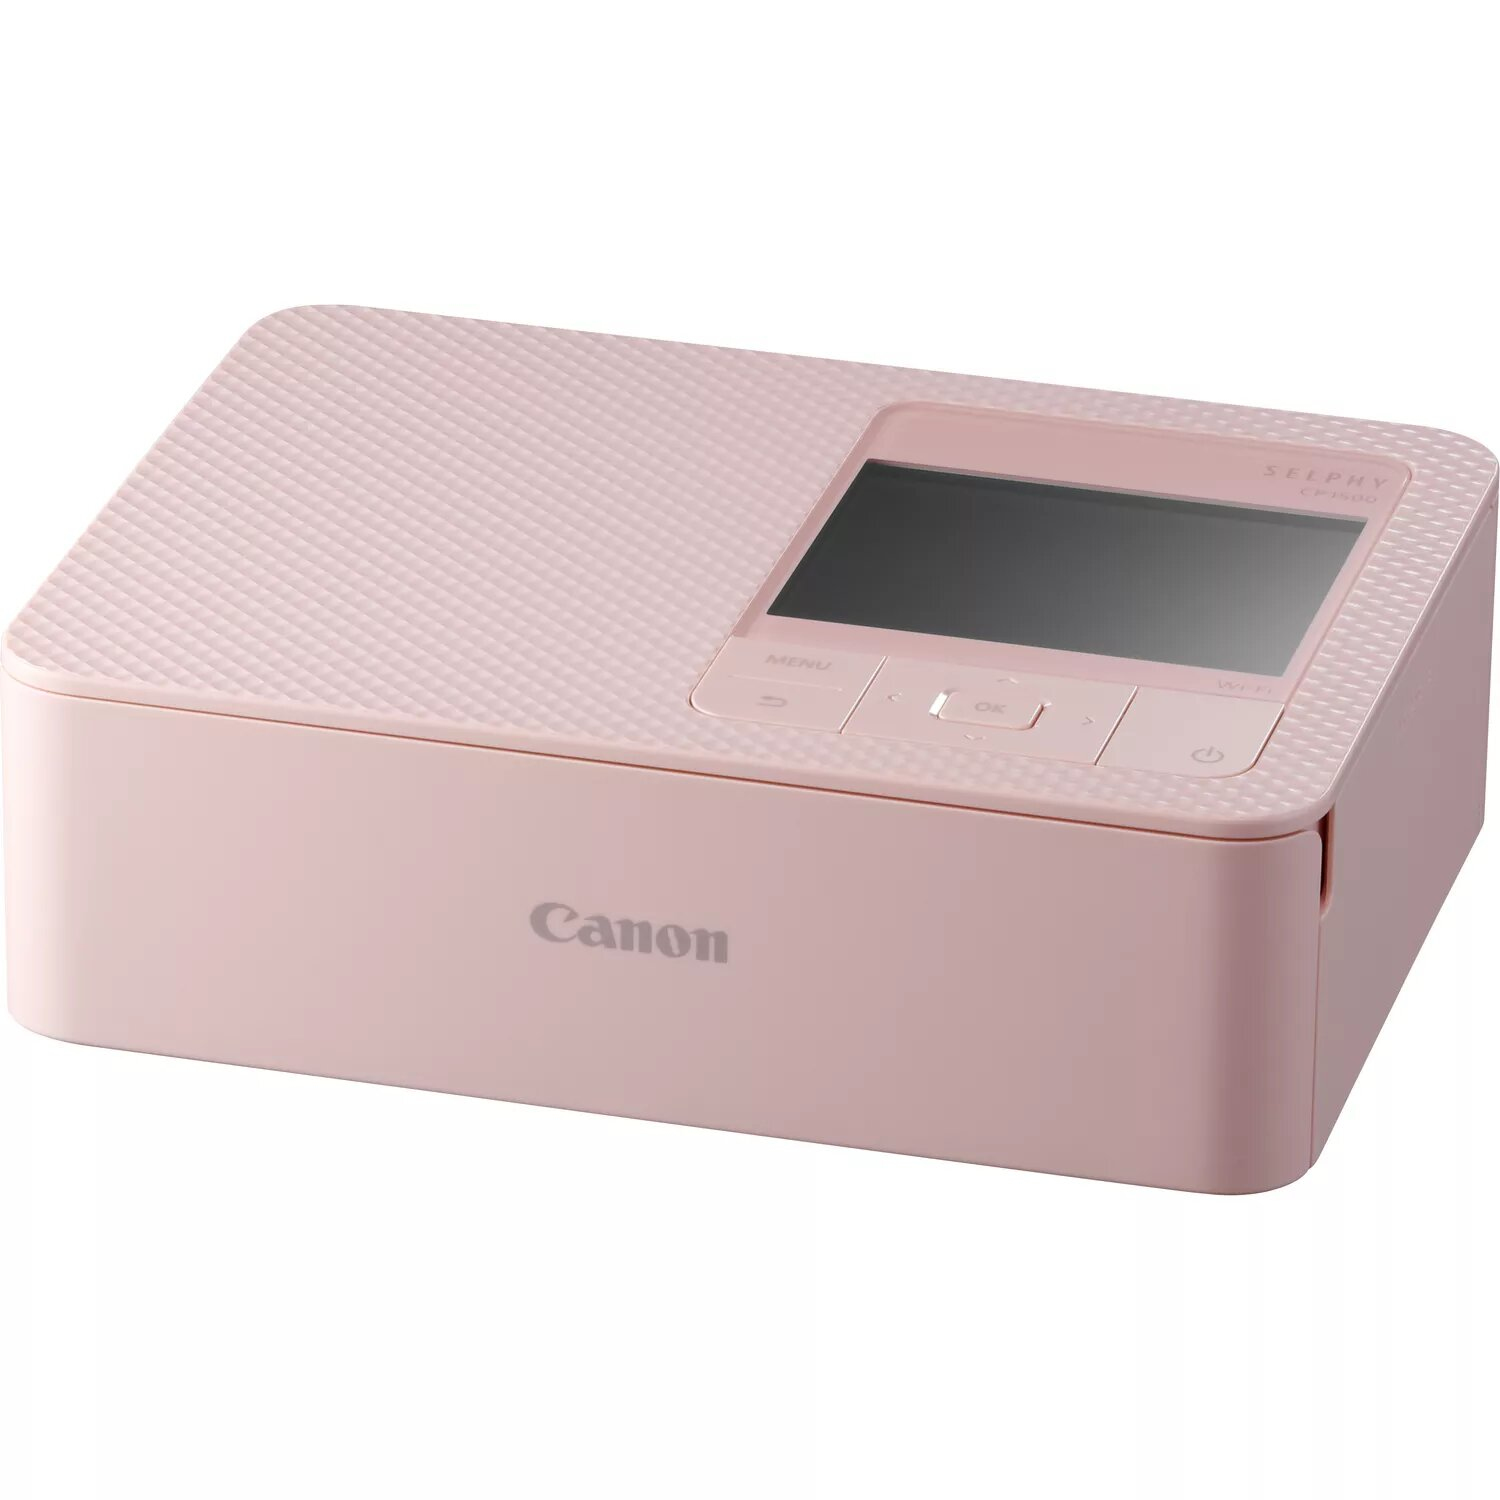 Farbstoffsublimation CP1500 Fotodrucker CANON SELPHY